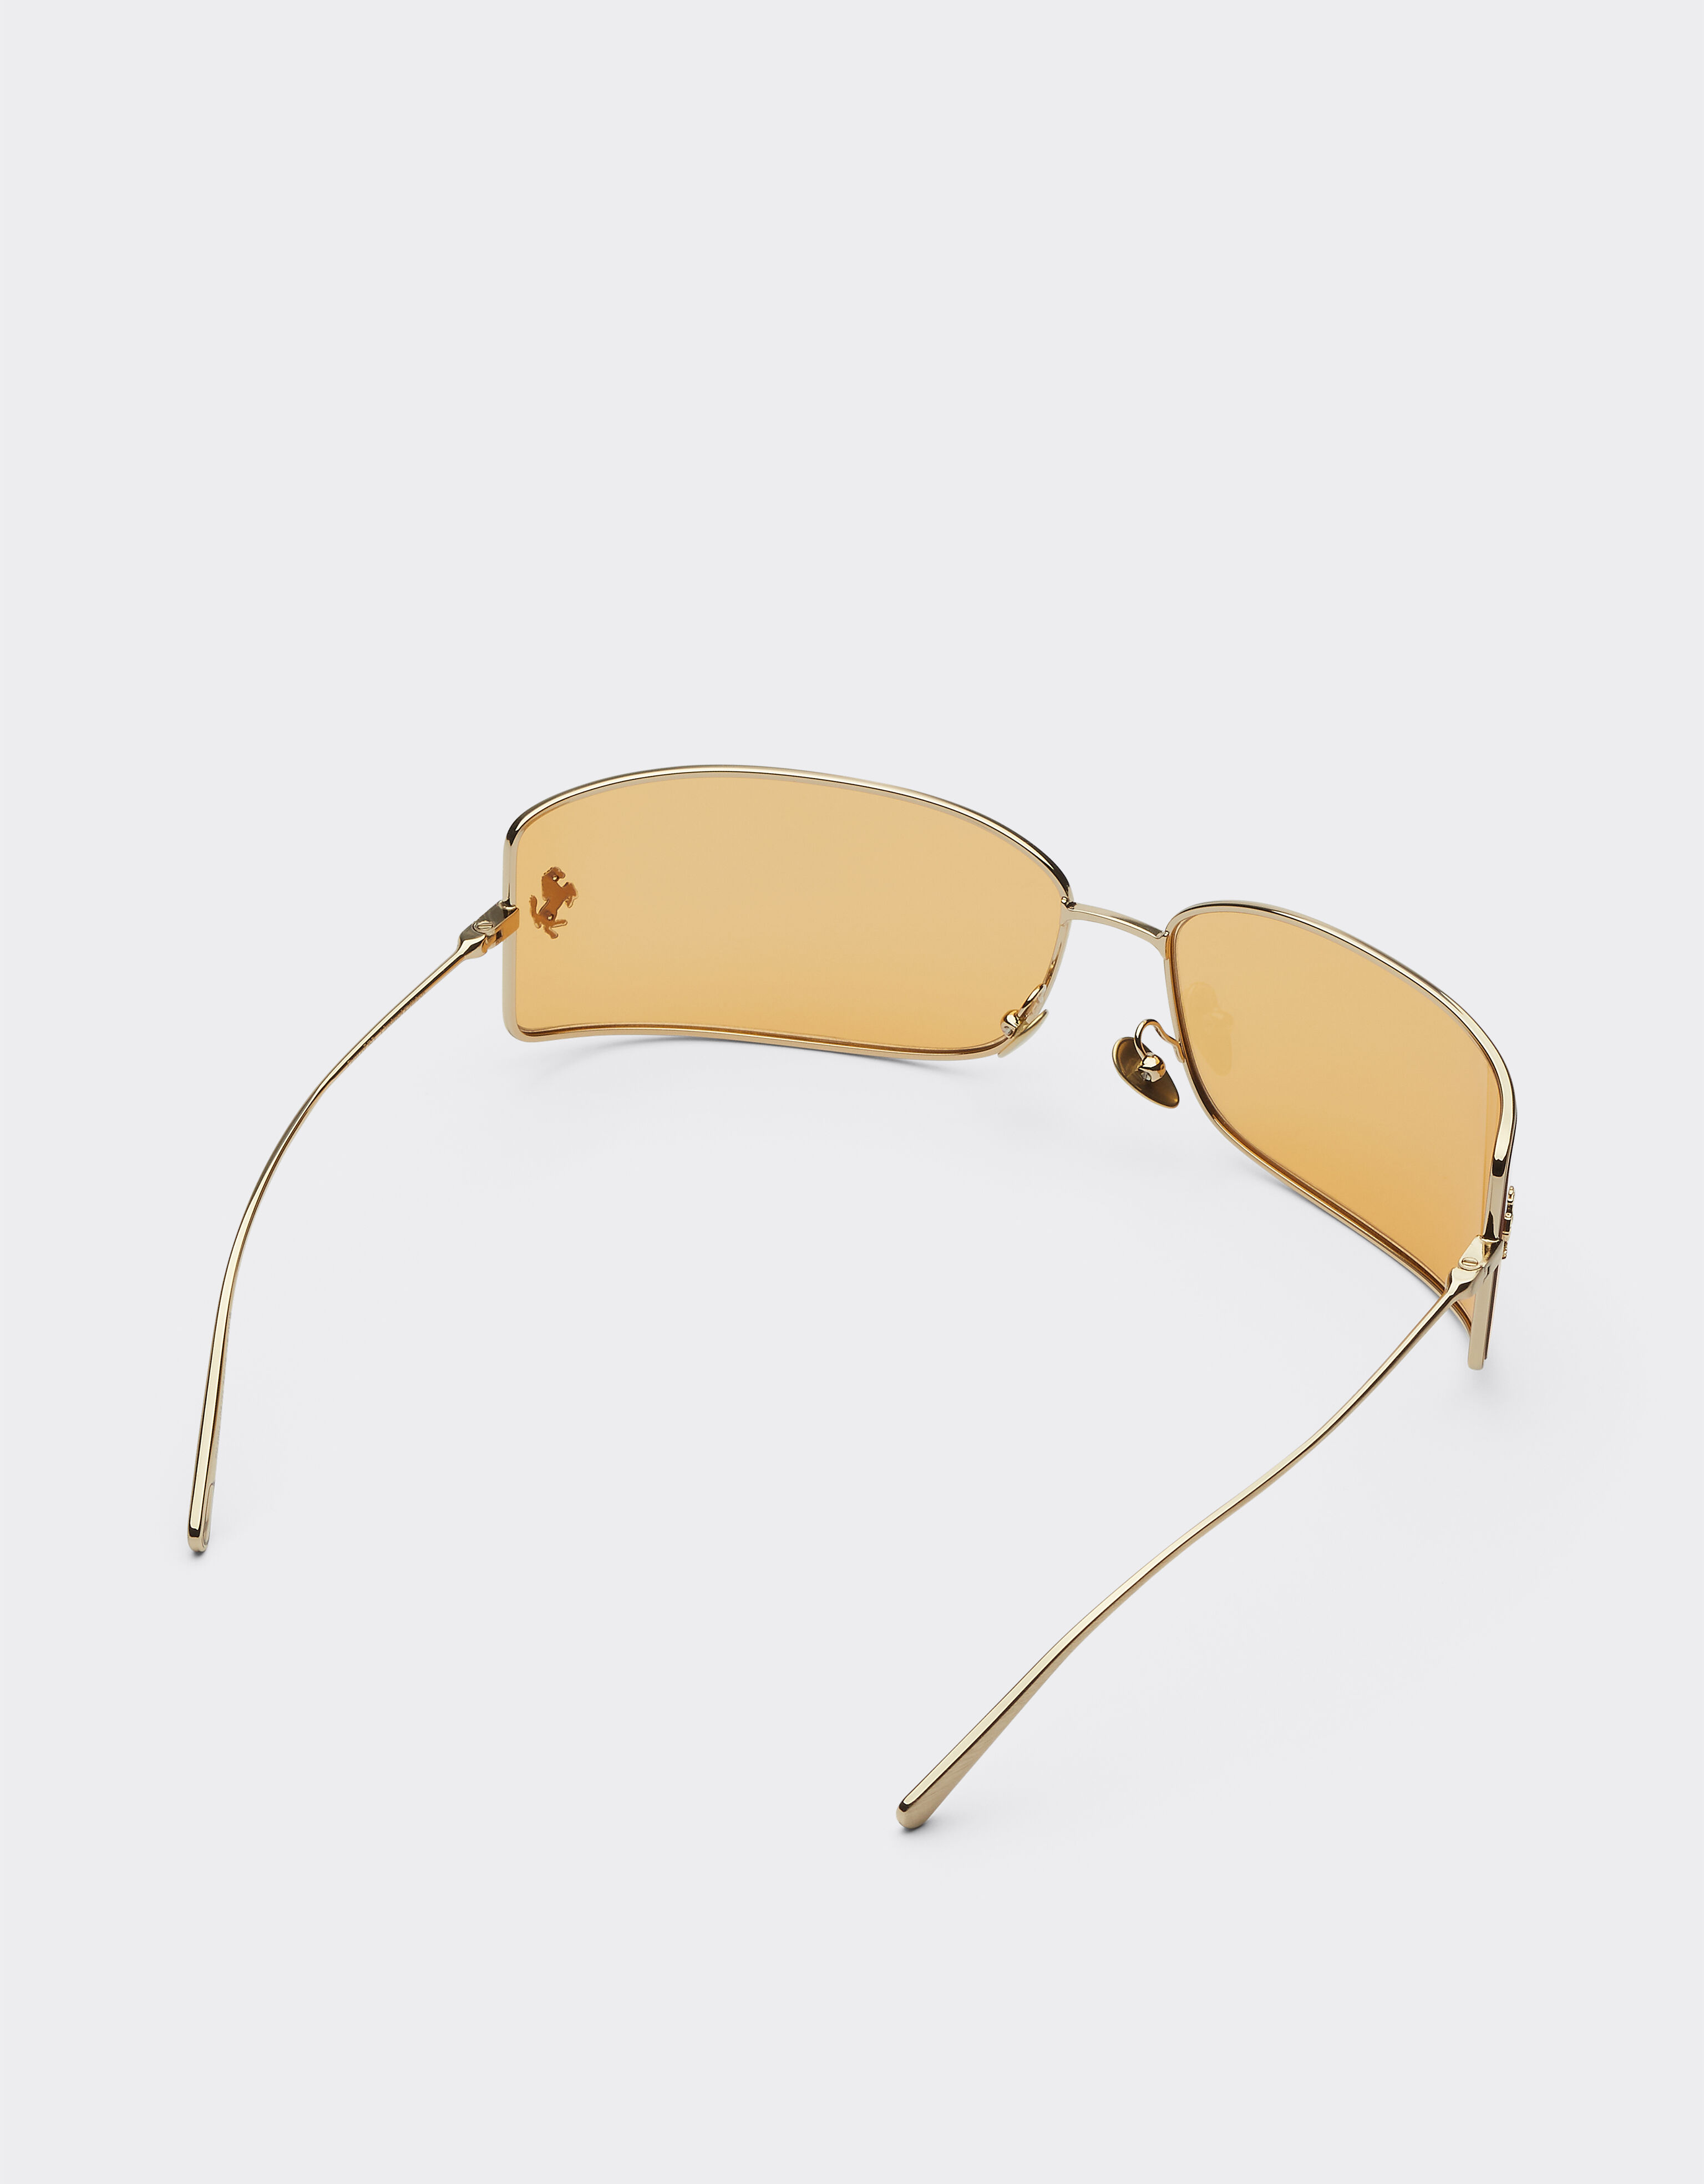 Ferrari Ferrari sunglasses with gold lenses 金色 F0643f